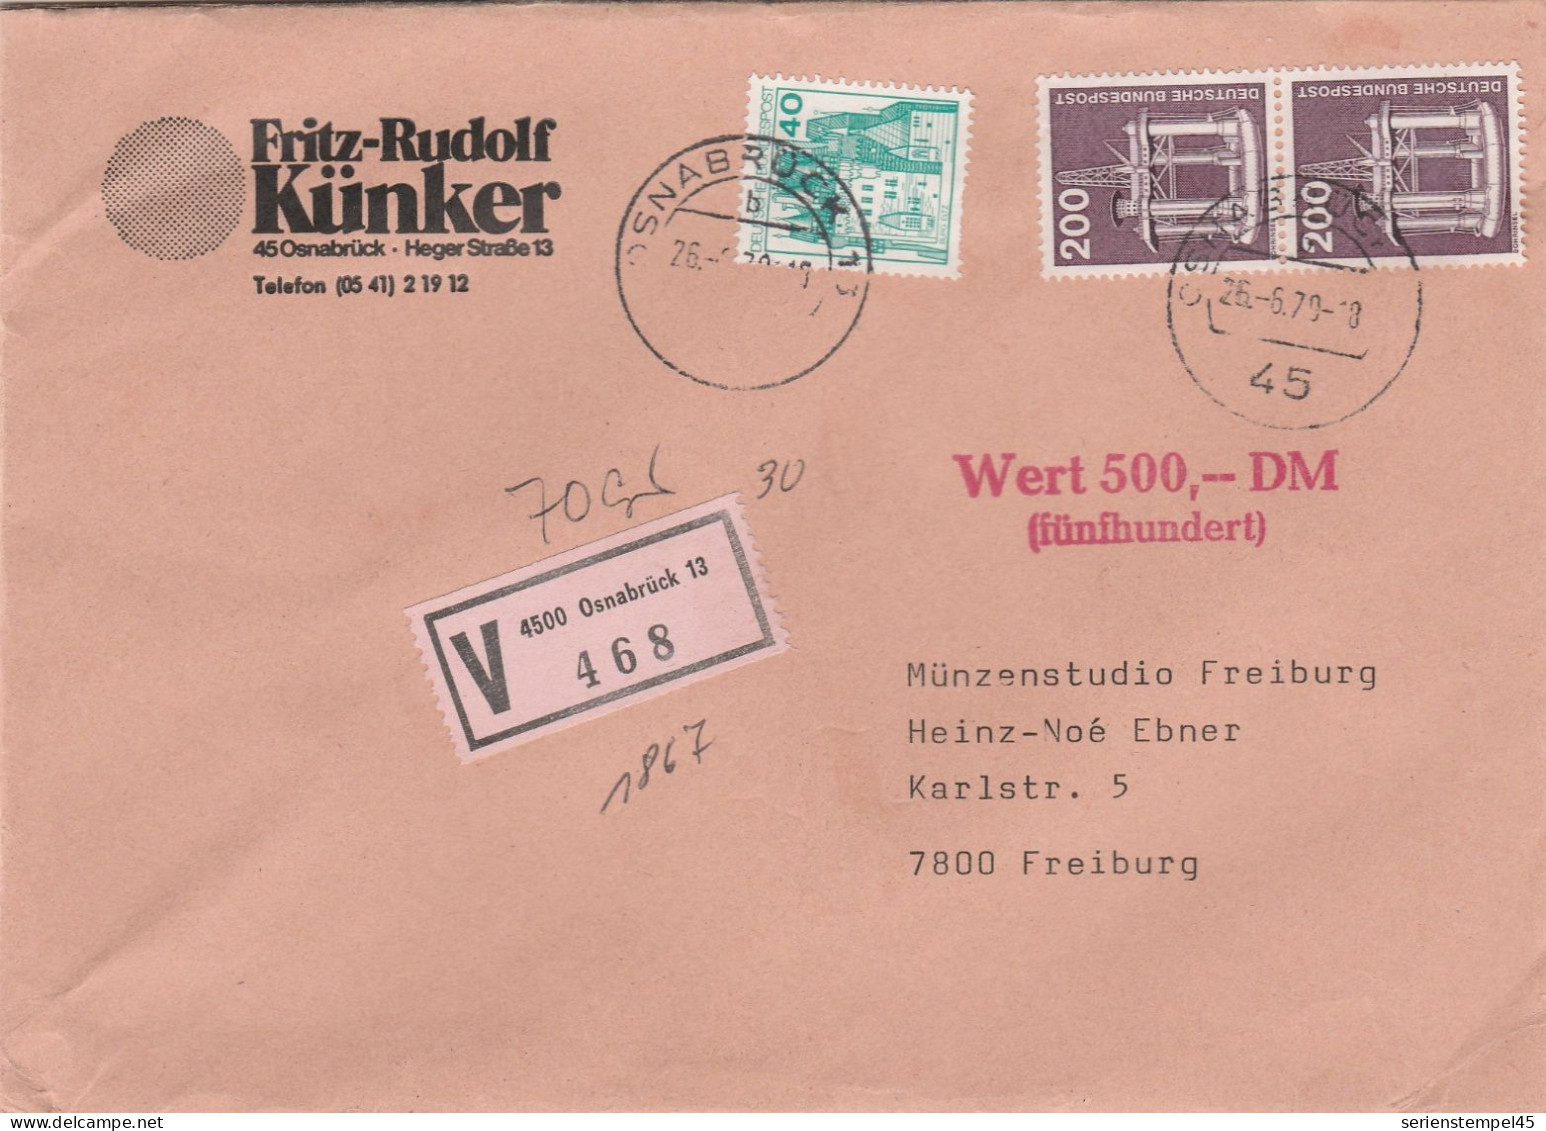 Bund Wertbrief 500 DM Mit V Zettel 4500 Osnabrück 13 Porto 4,40 DM 1979 - R- & V- Vignette